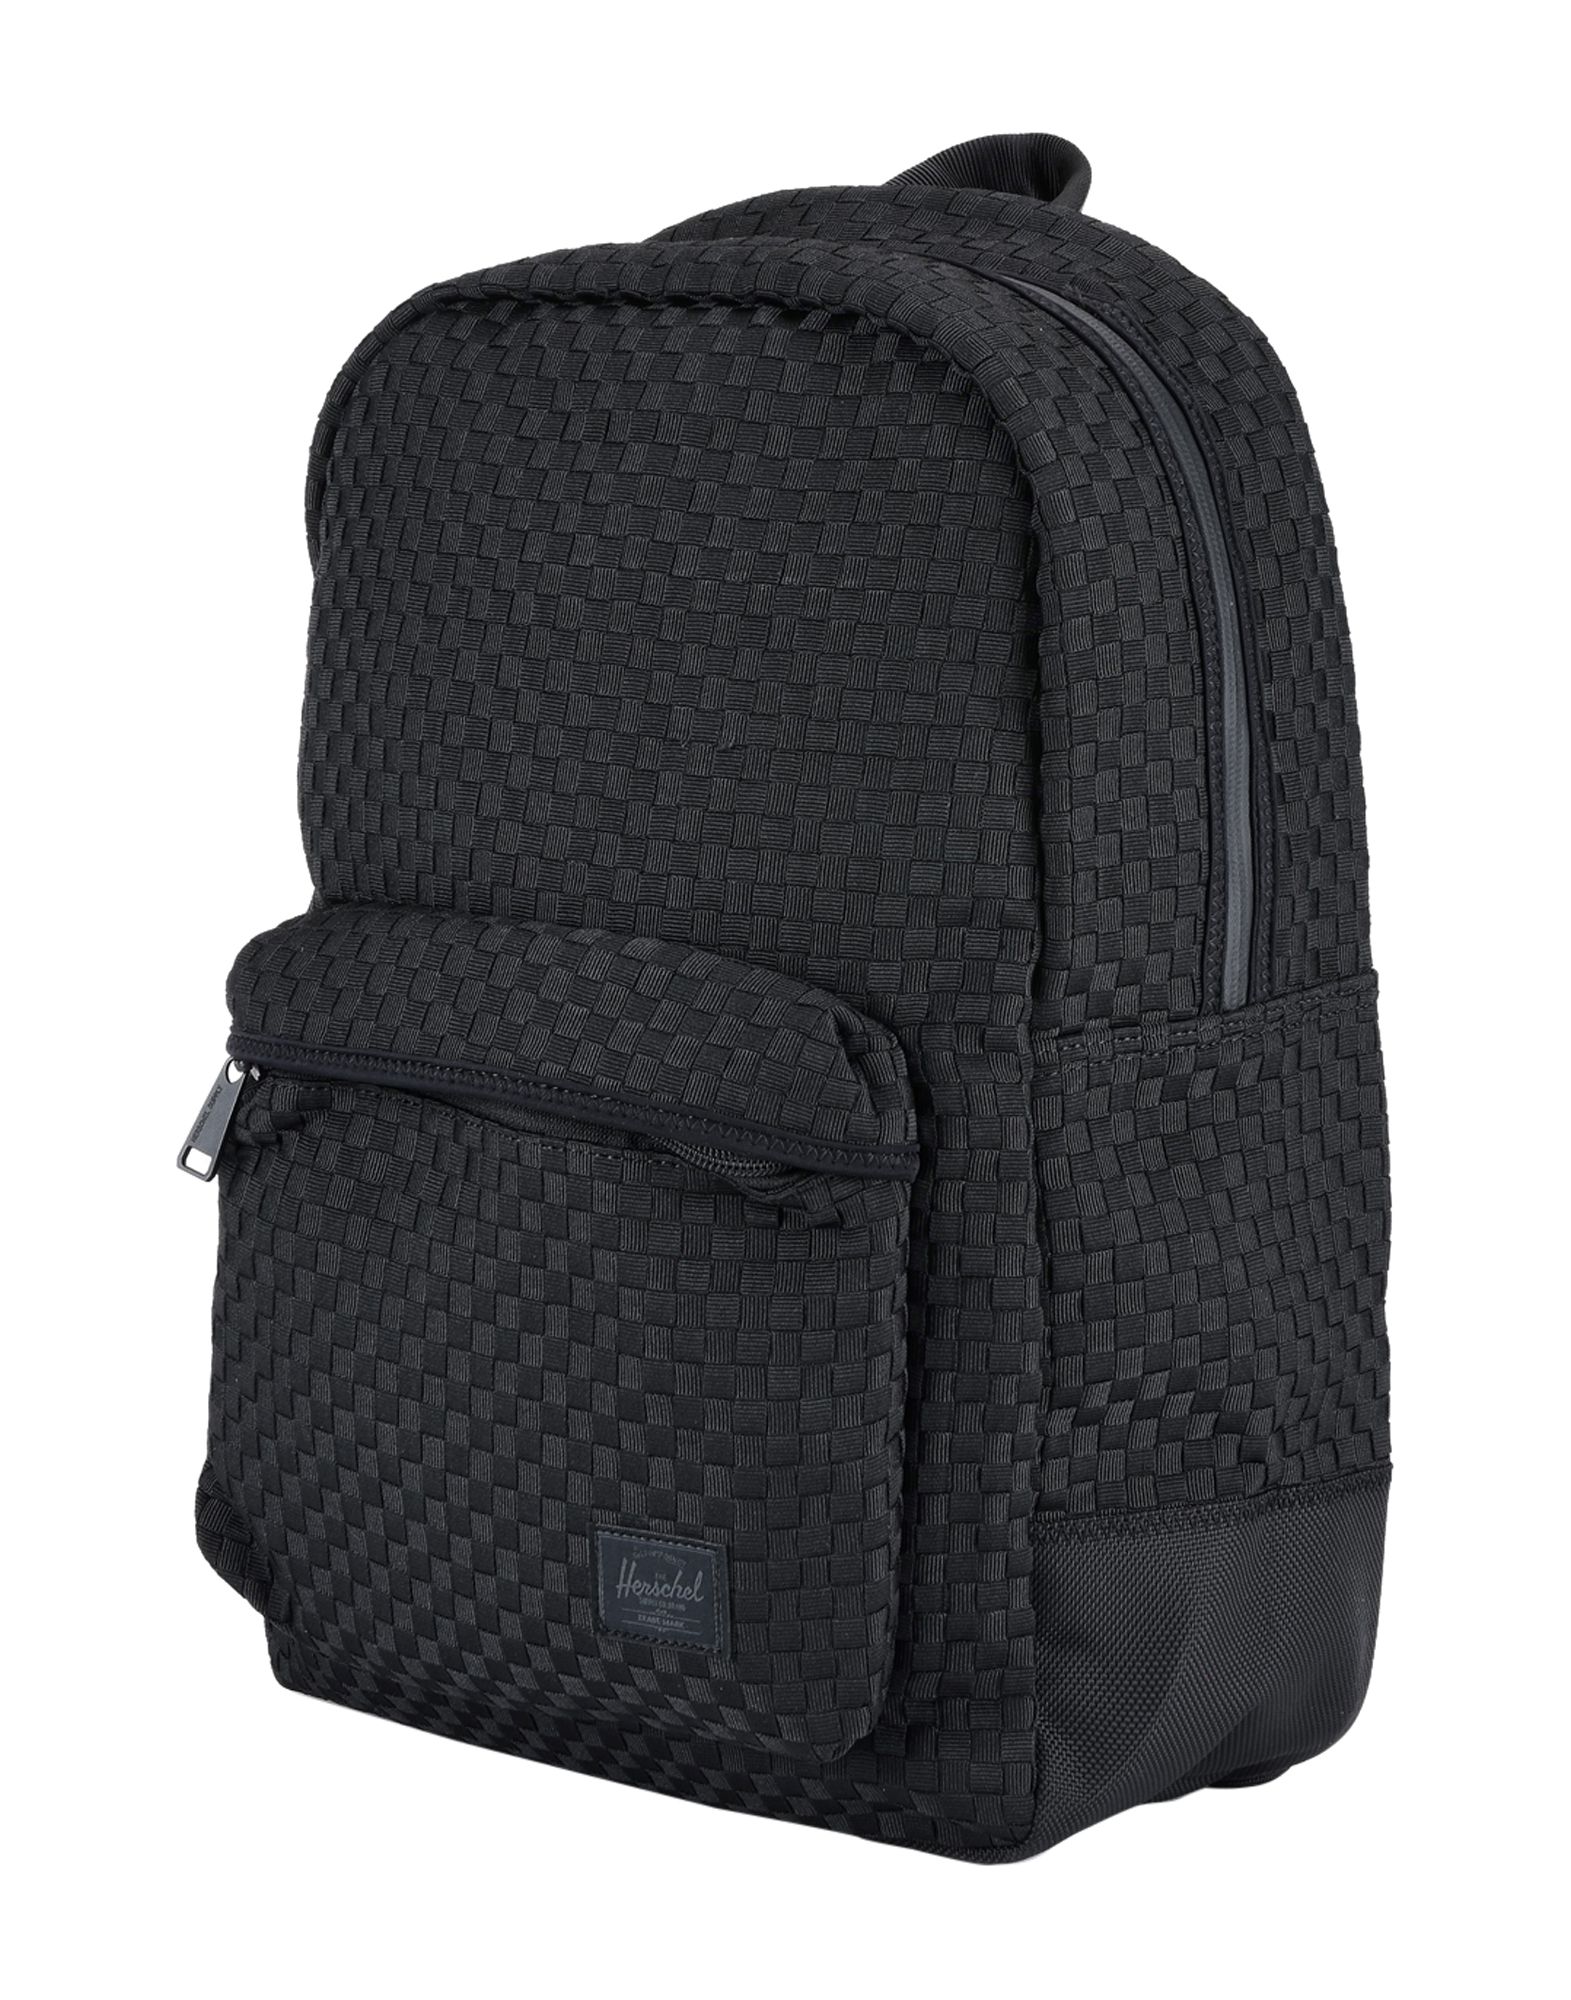 HERSCHEL SUPPLY CO Backpack & fanny pack,45401521OK 1